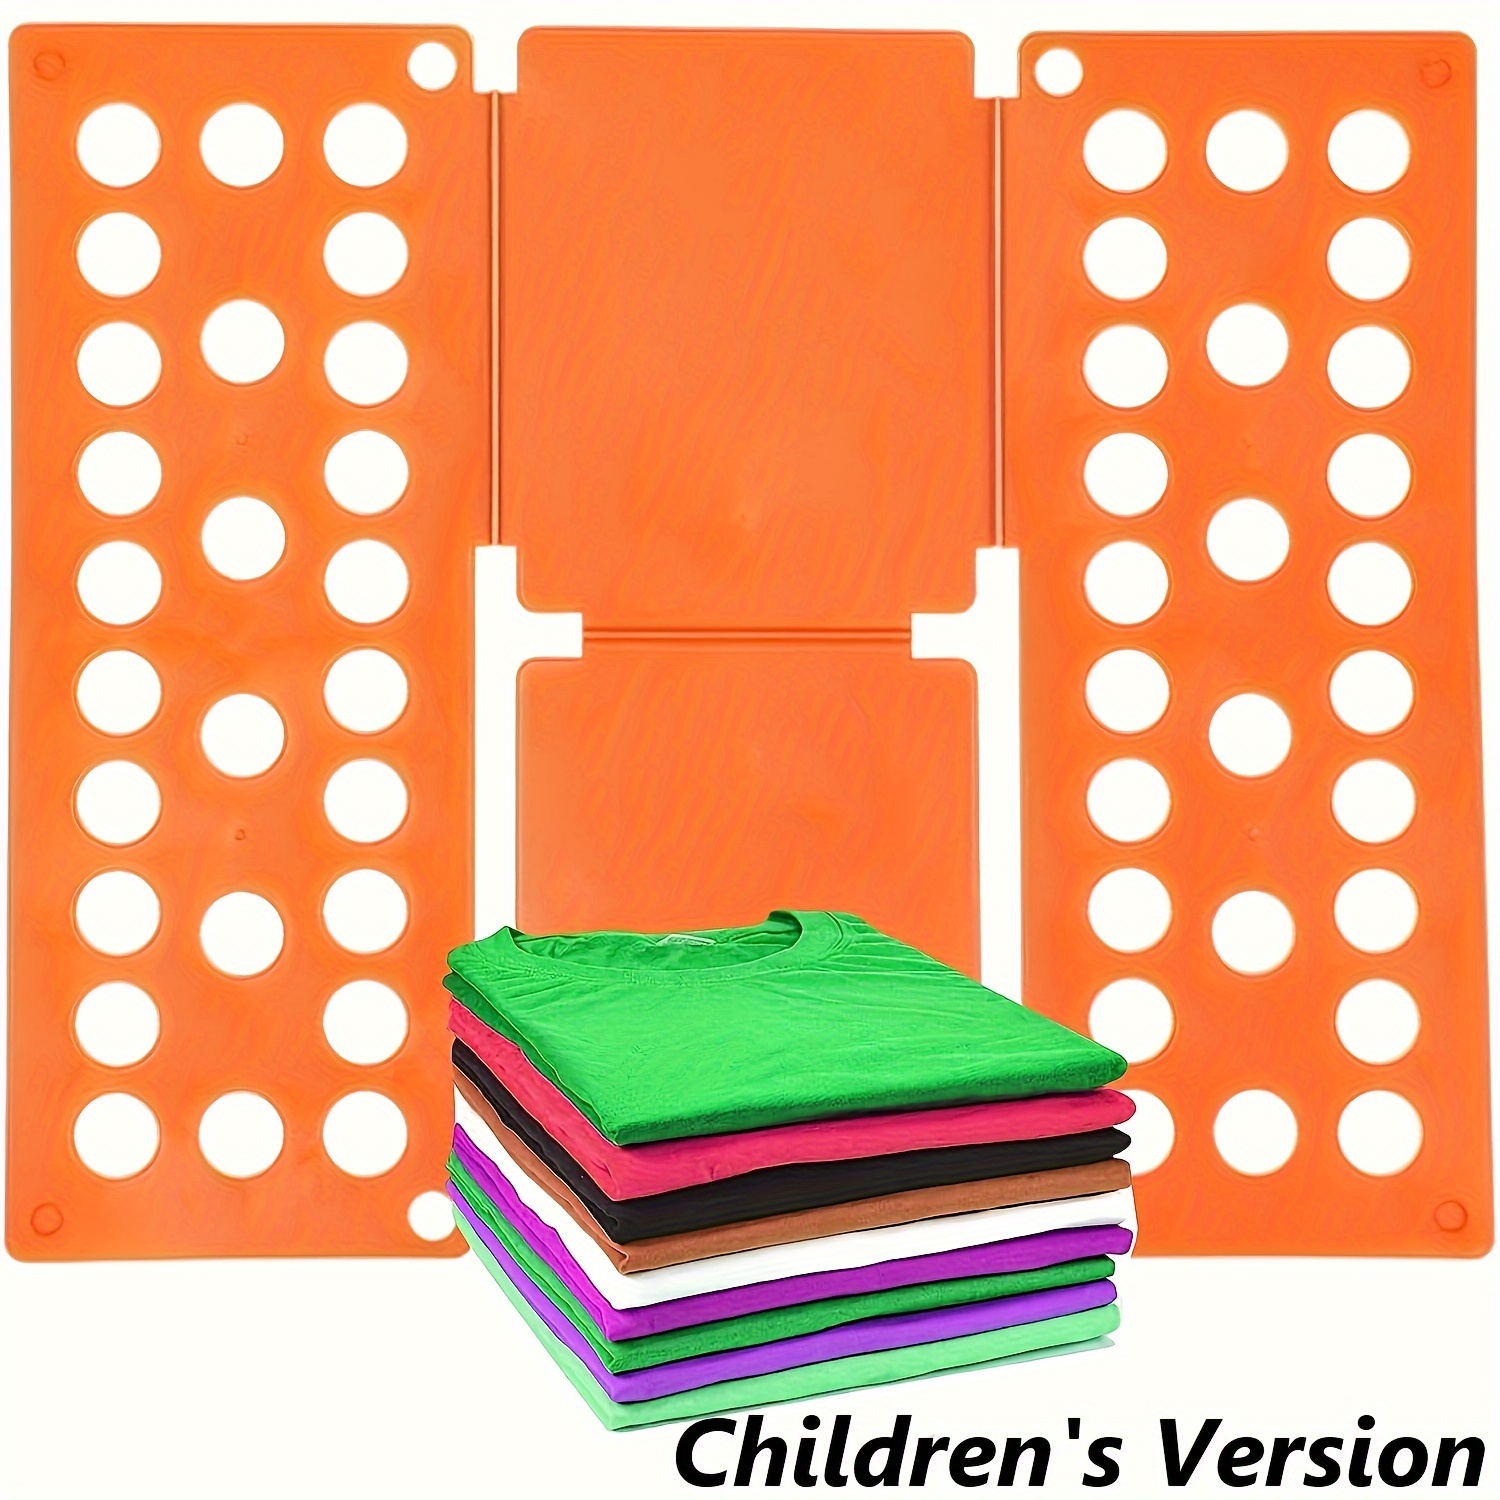 Kid And Adults Shirt Folder Tshirt Folding Board (Black,Red)